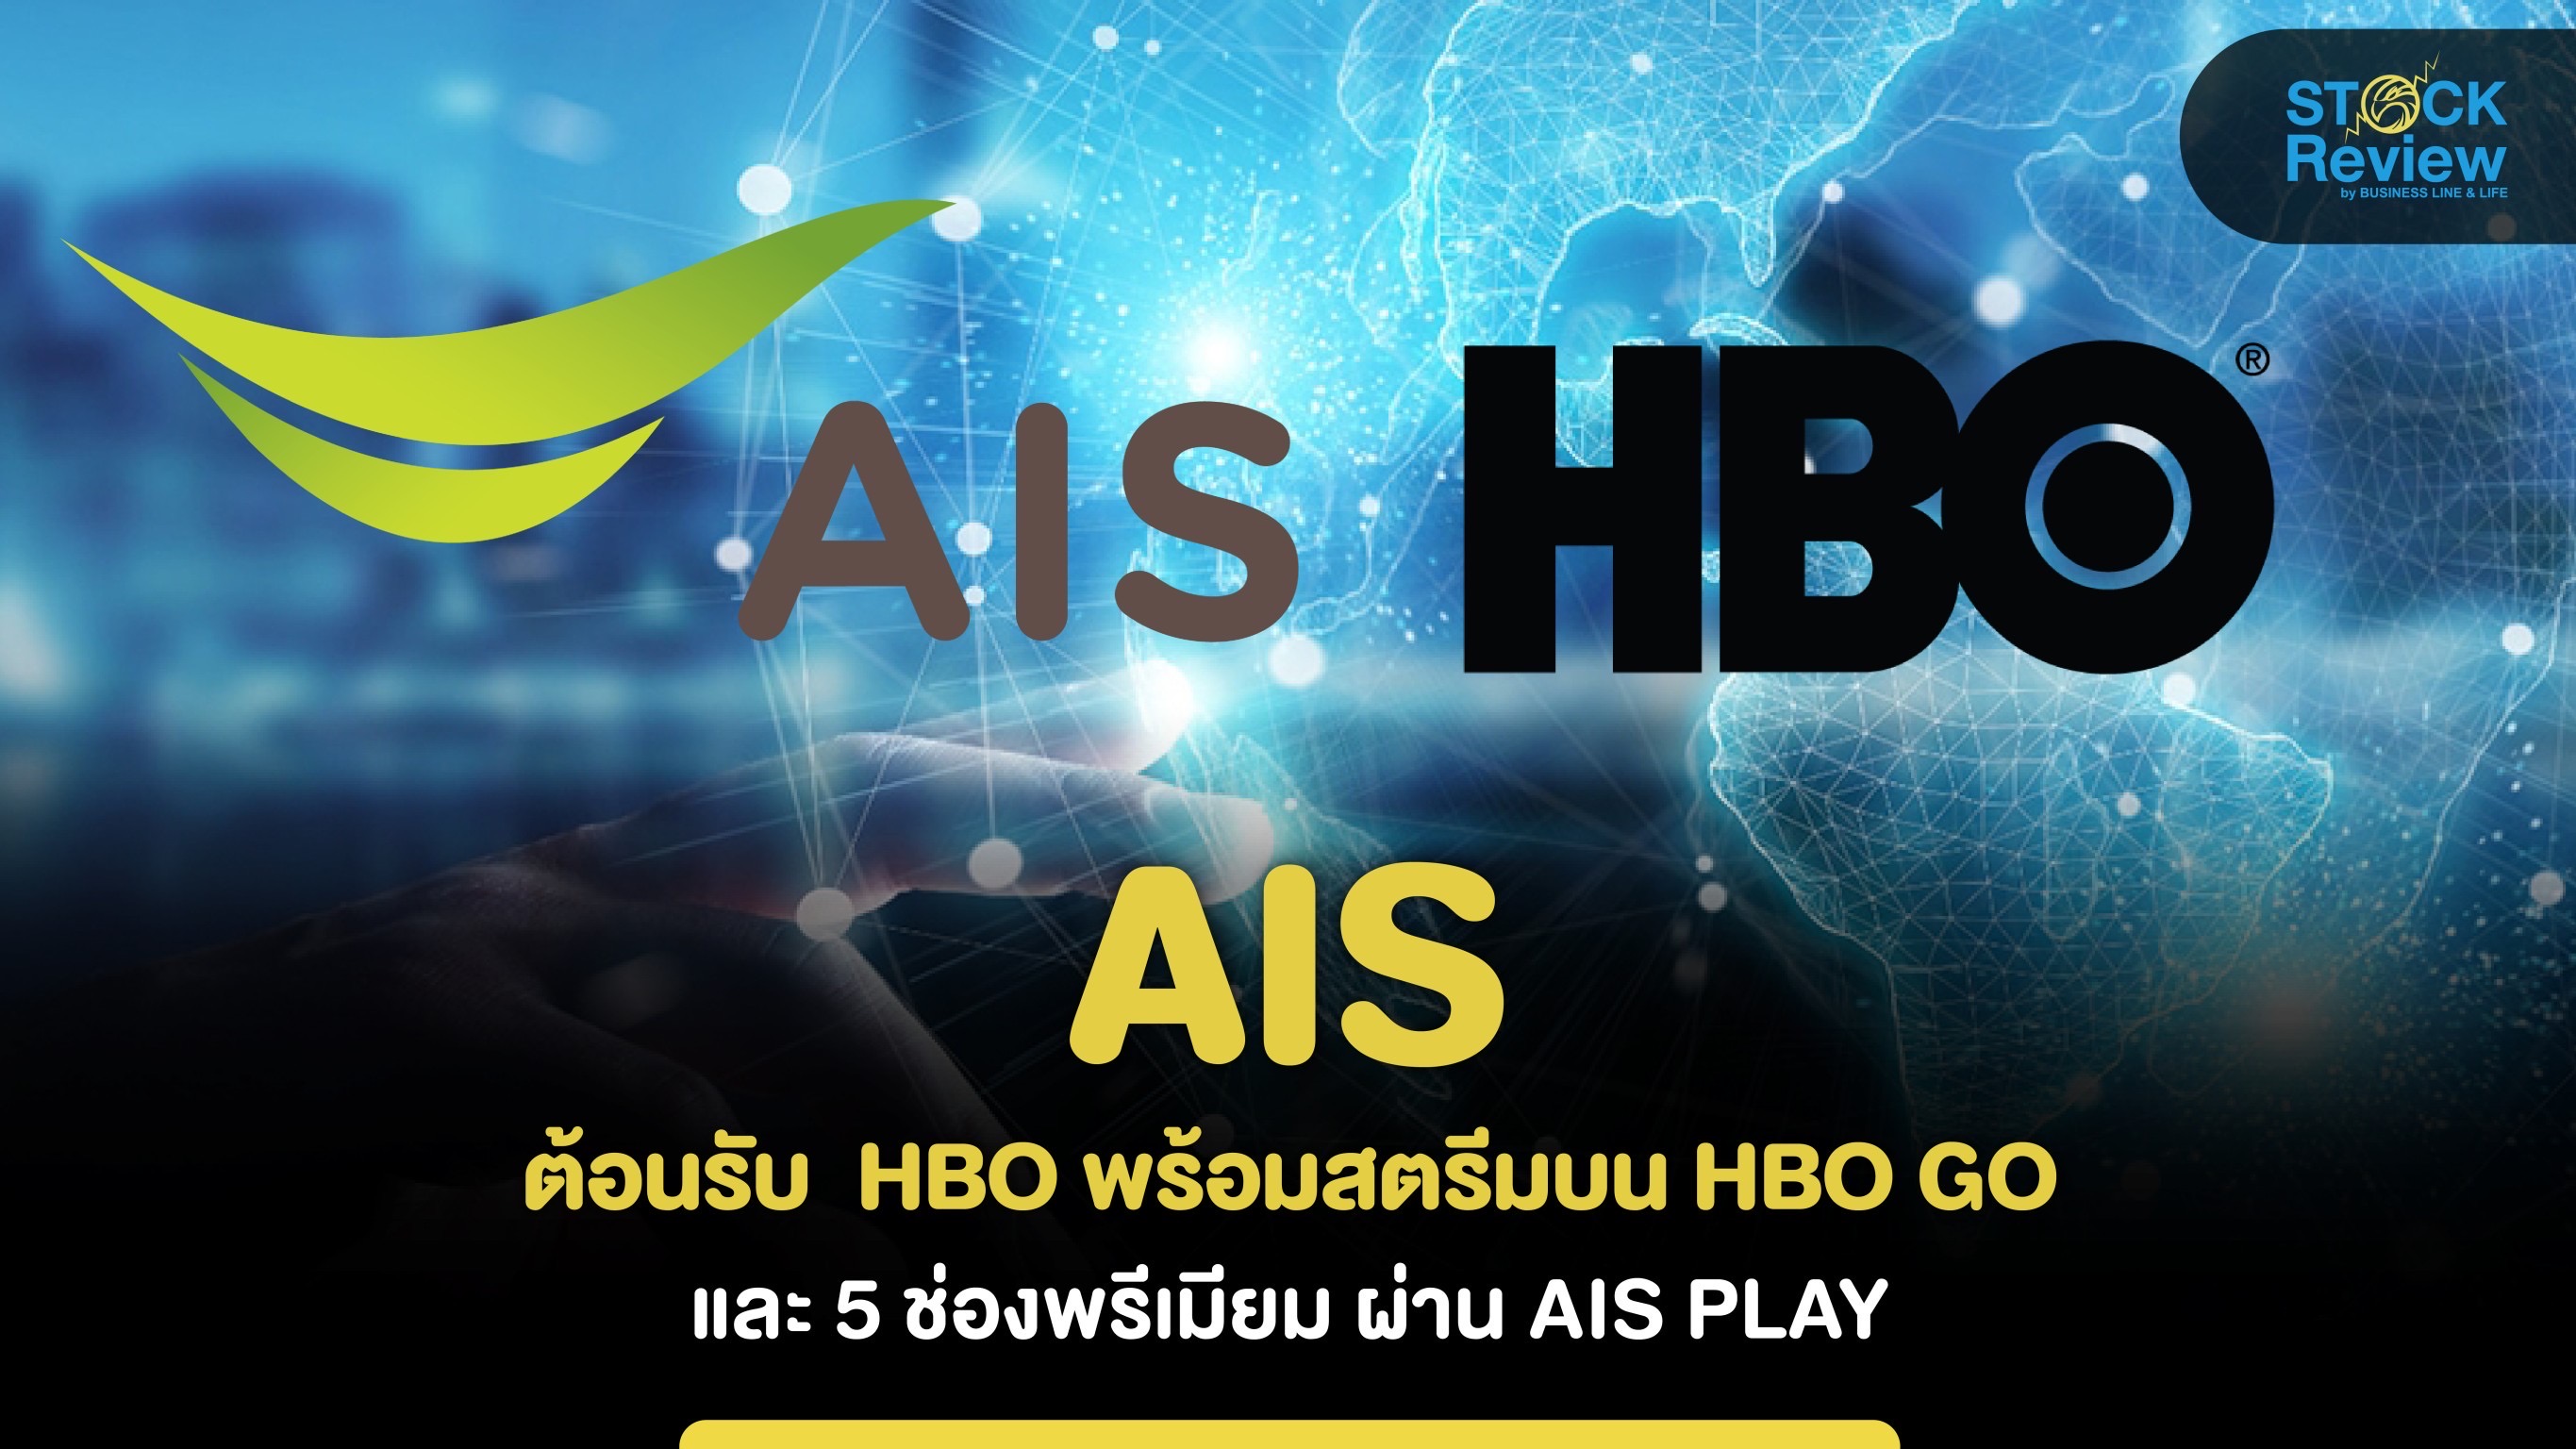 AIS ต้อนรับ HBO พร้อมสตรีมบน HBO GO และ 5 ช่องพรีเมียมผ่าน AIS PLAY